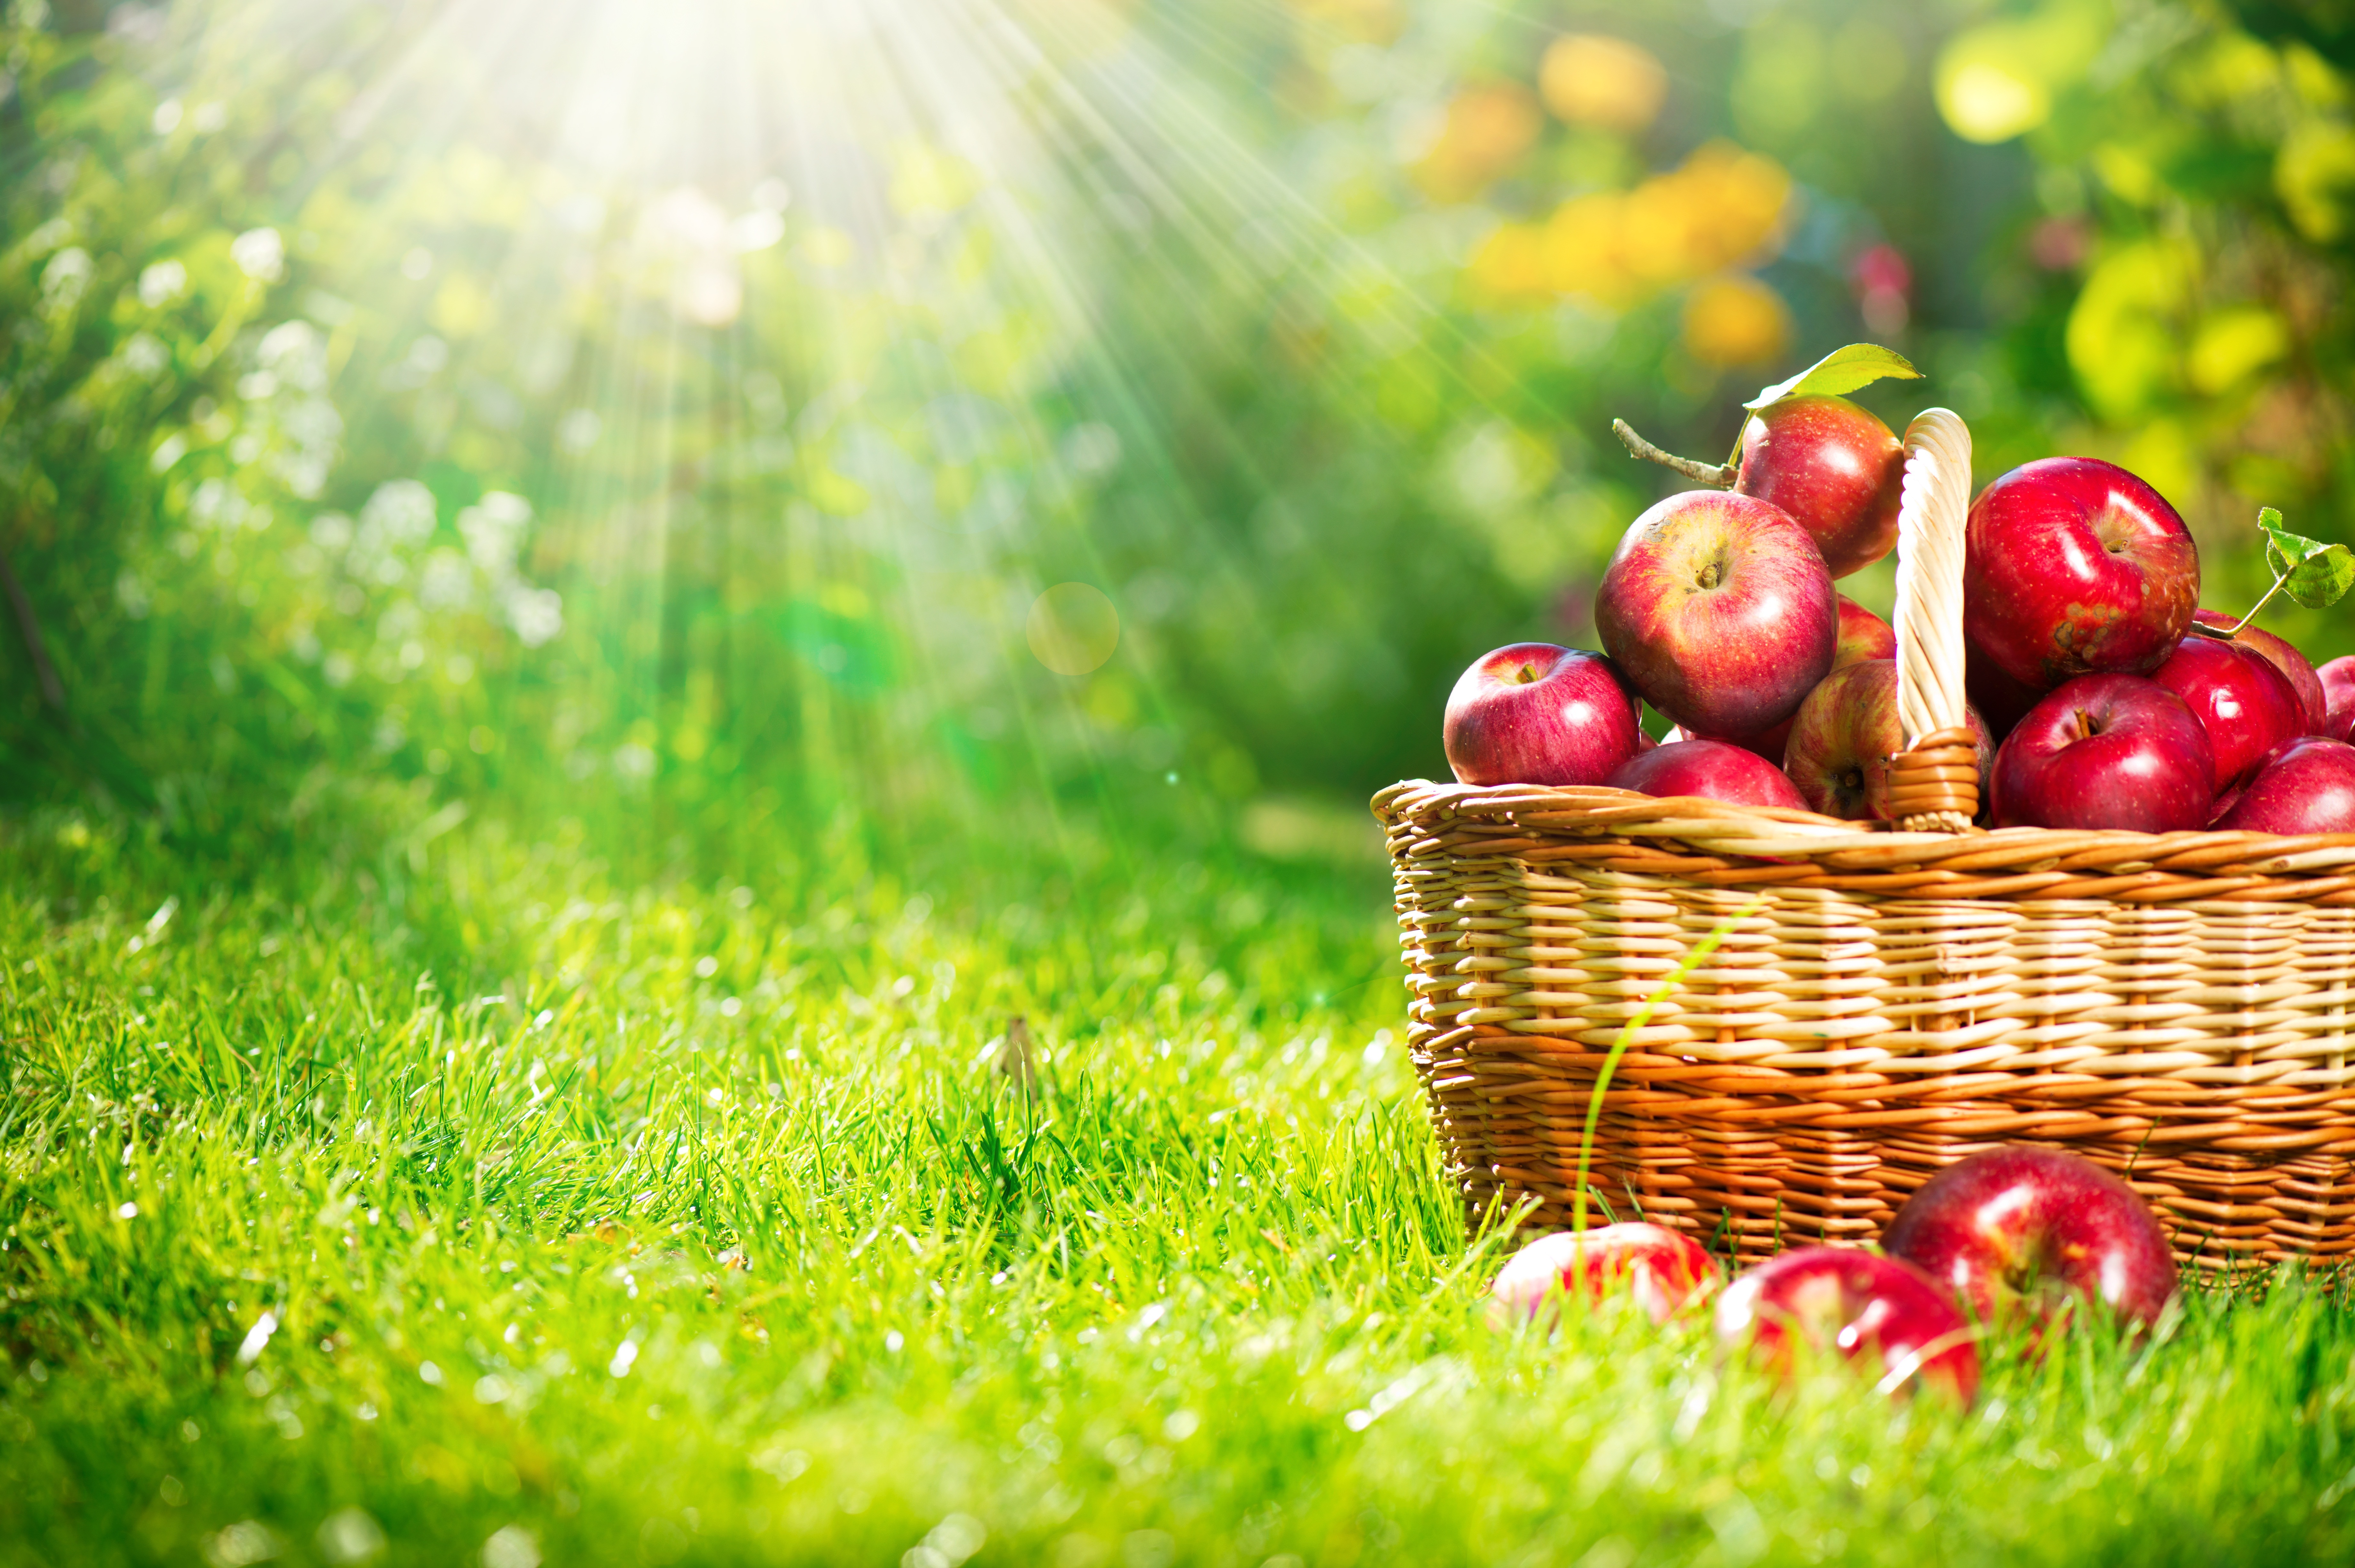 apples-basket-fruit-red-grass-light-rays-nature-autumn